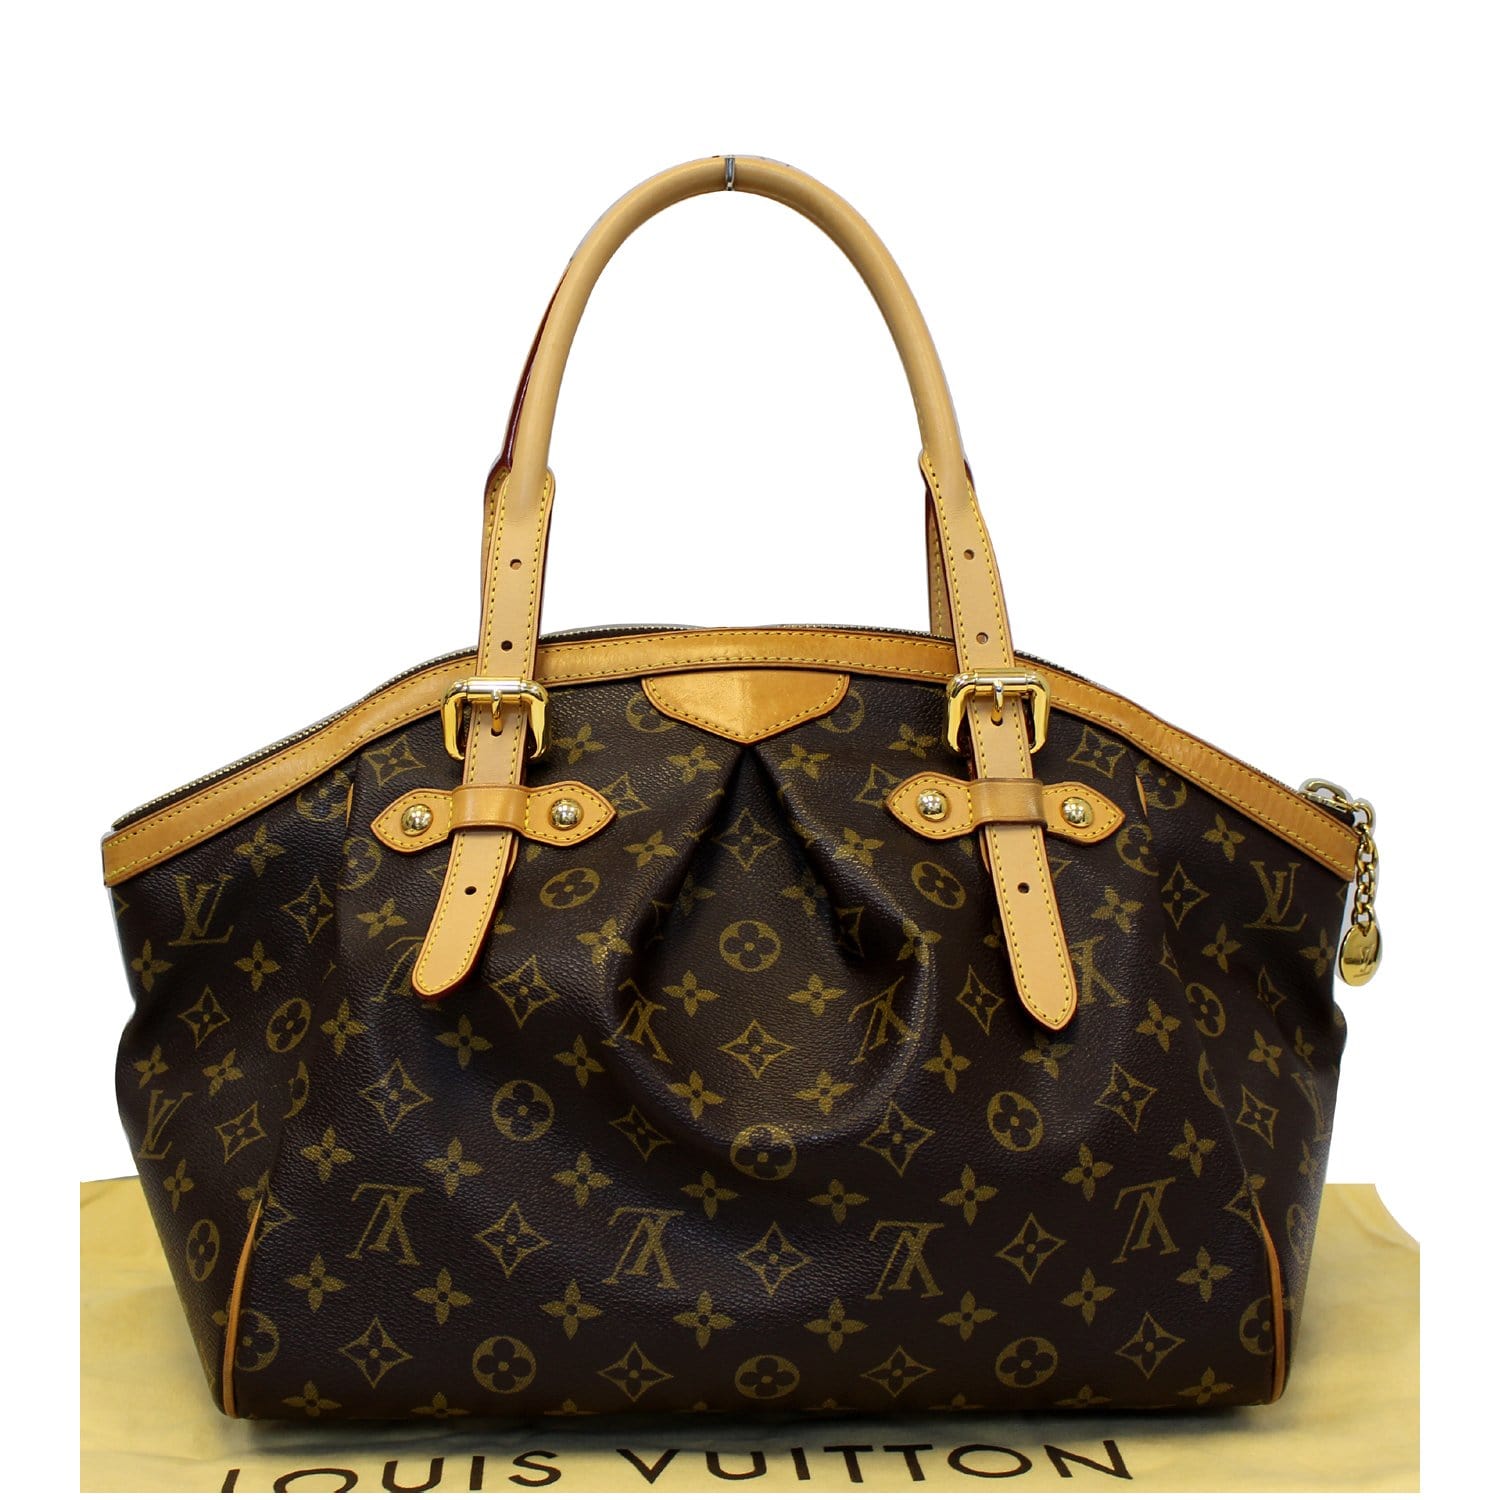 Louis Vuitton, Bags, Louis Vuitton Tivoli Gm Pm Is Smallgm Is Big